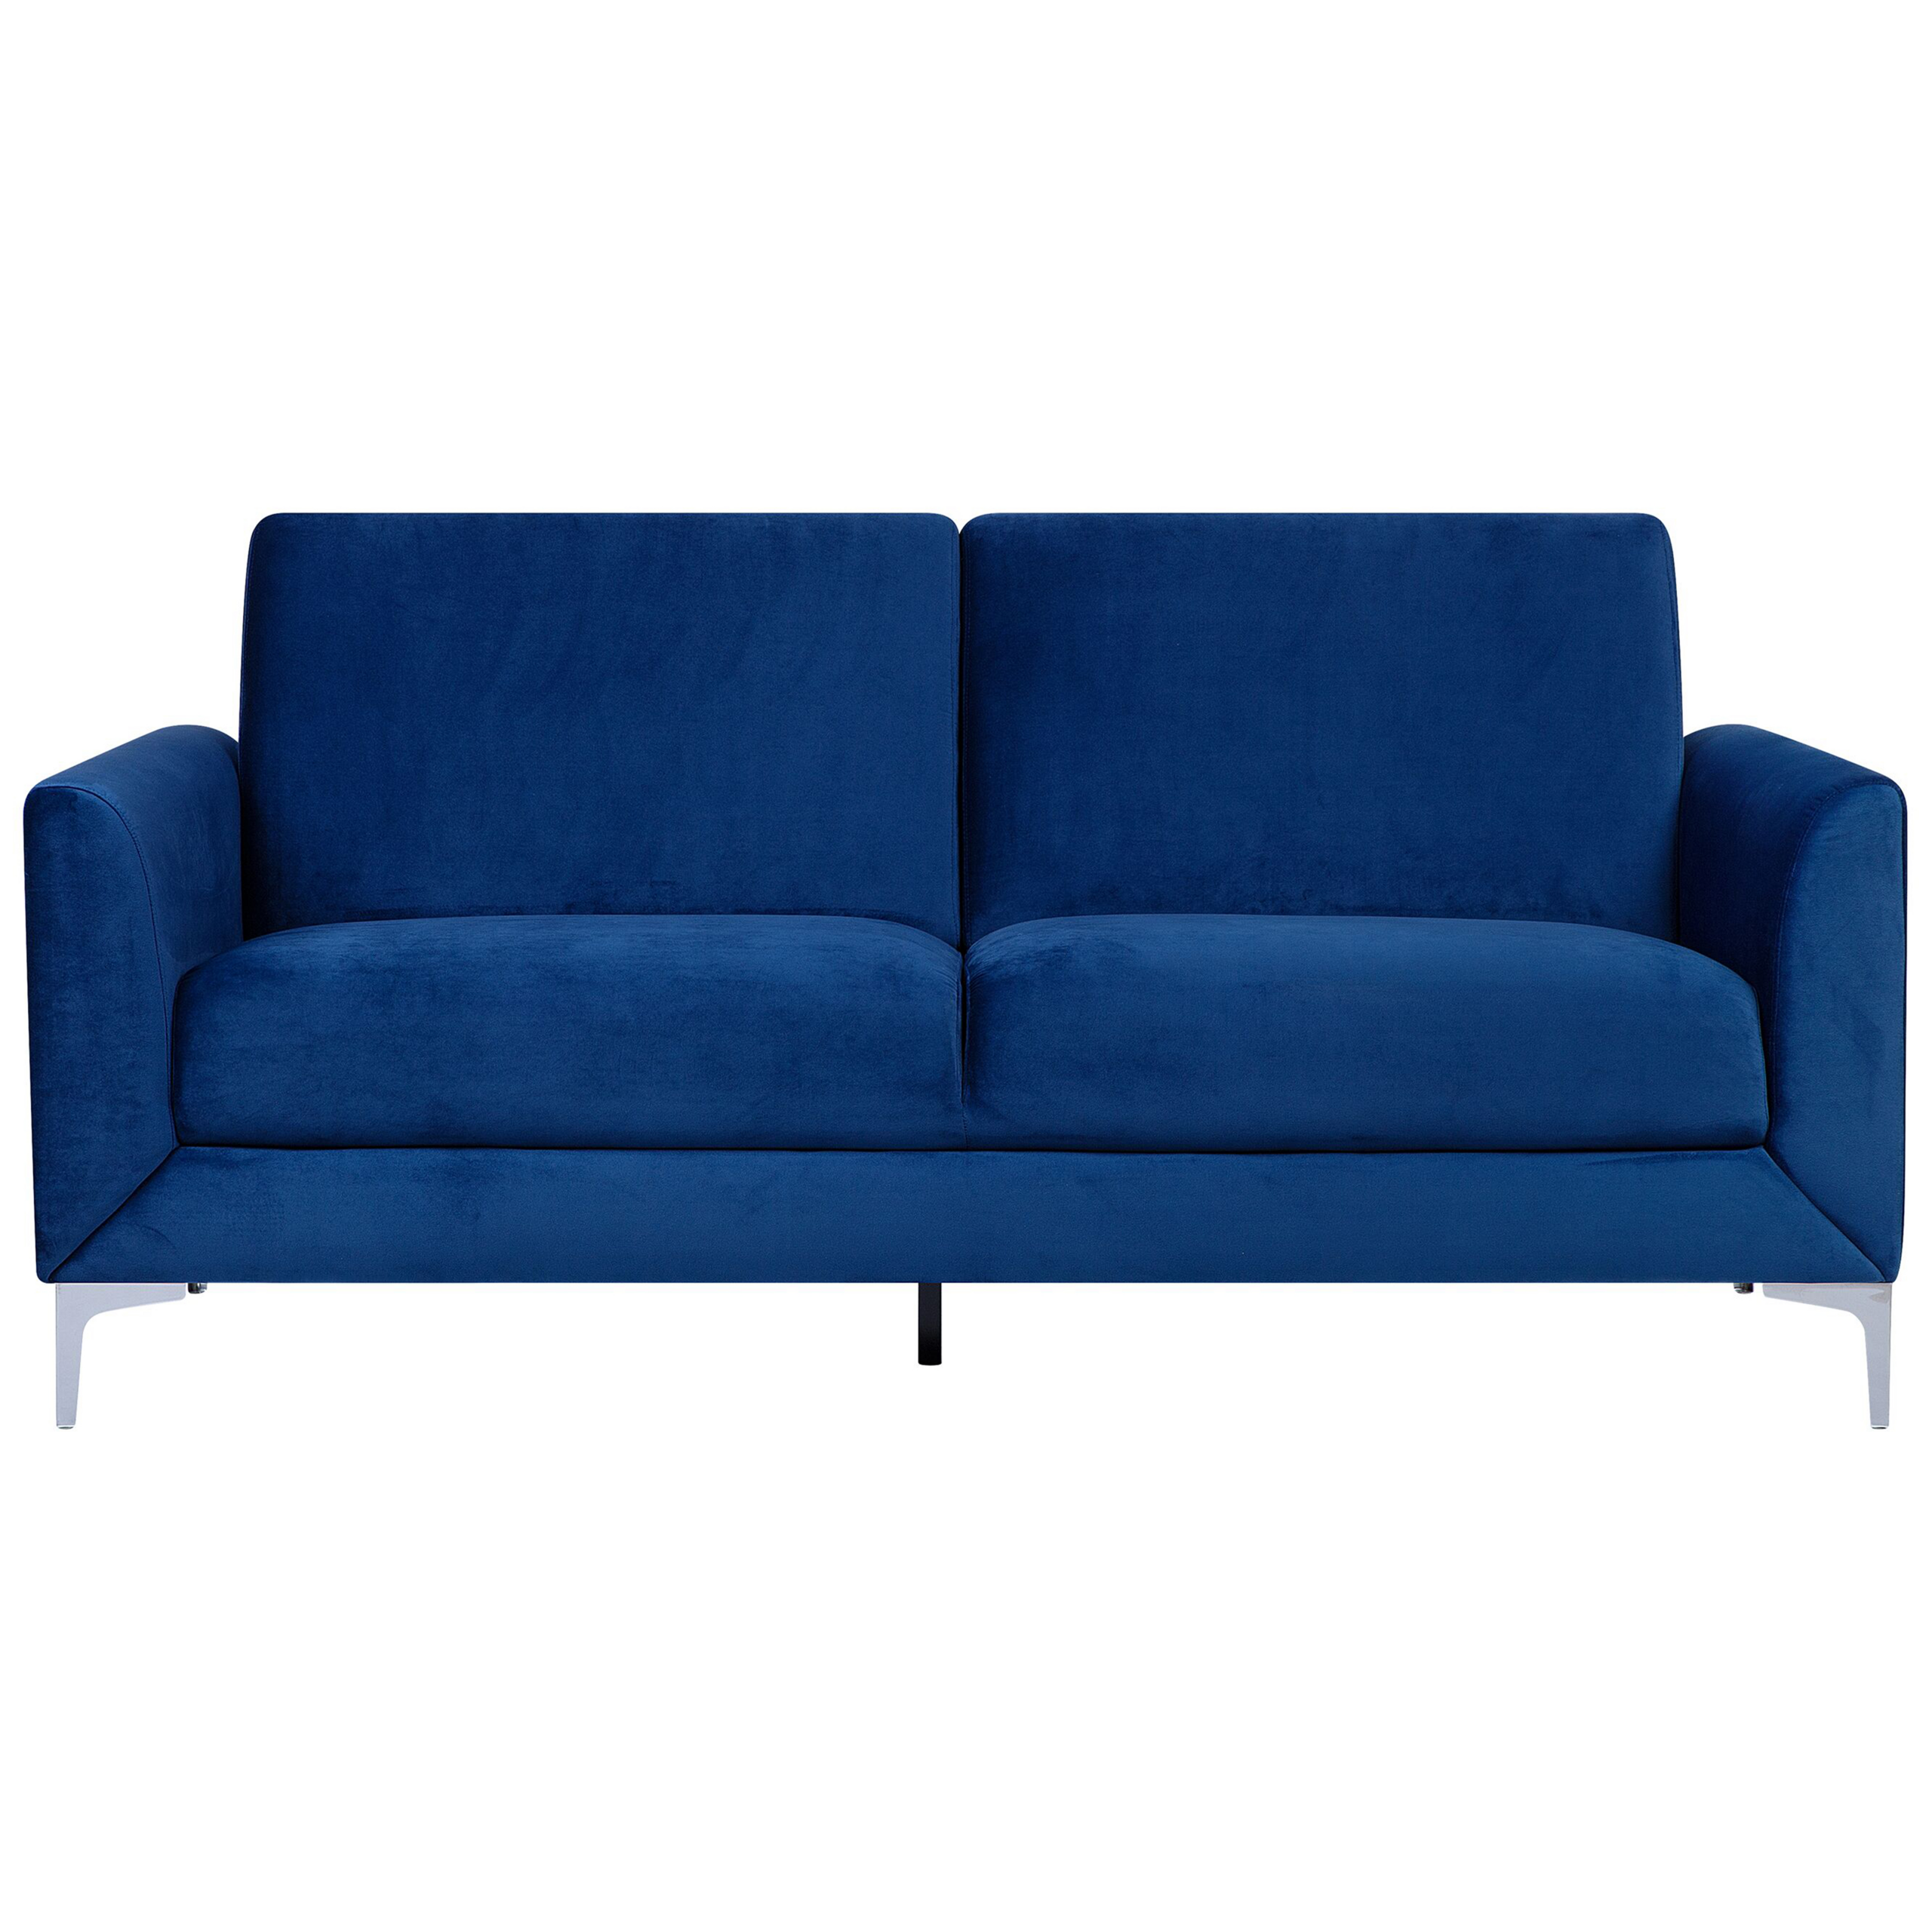 Beliani Sofa Blue Fabric Upholstery Silver Legs 3 Seater Glam